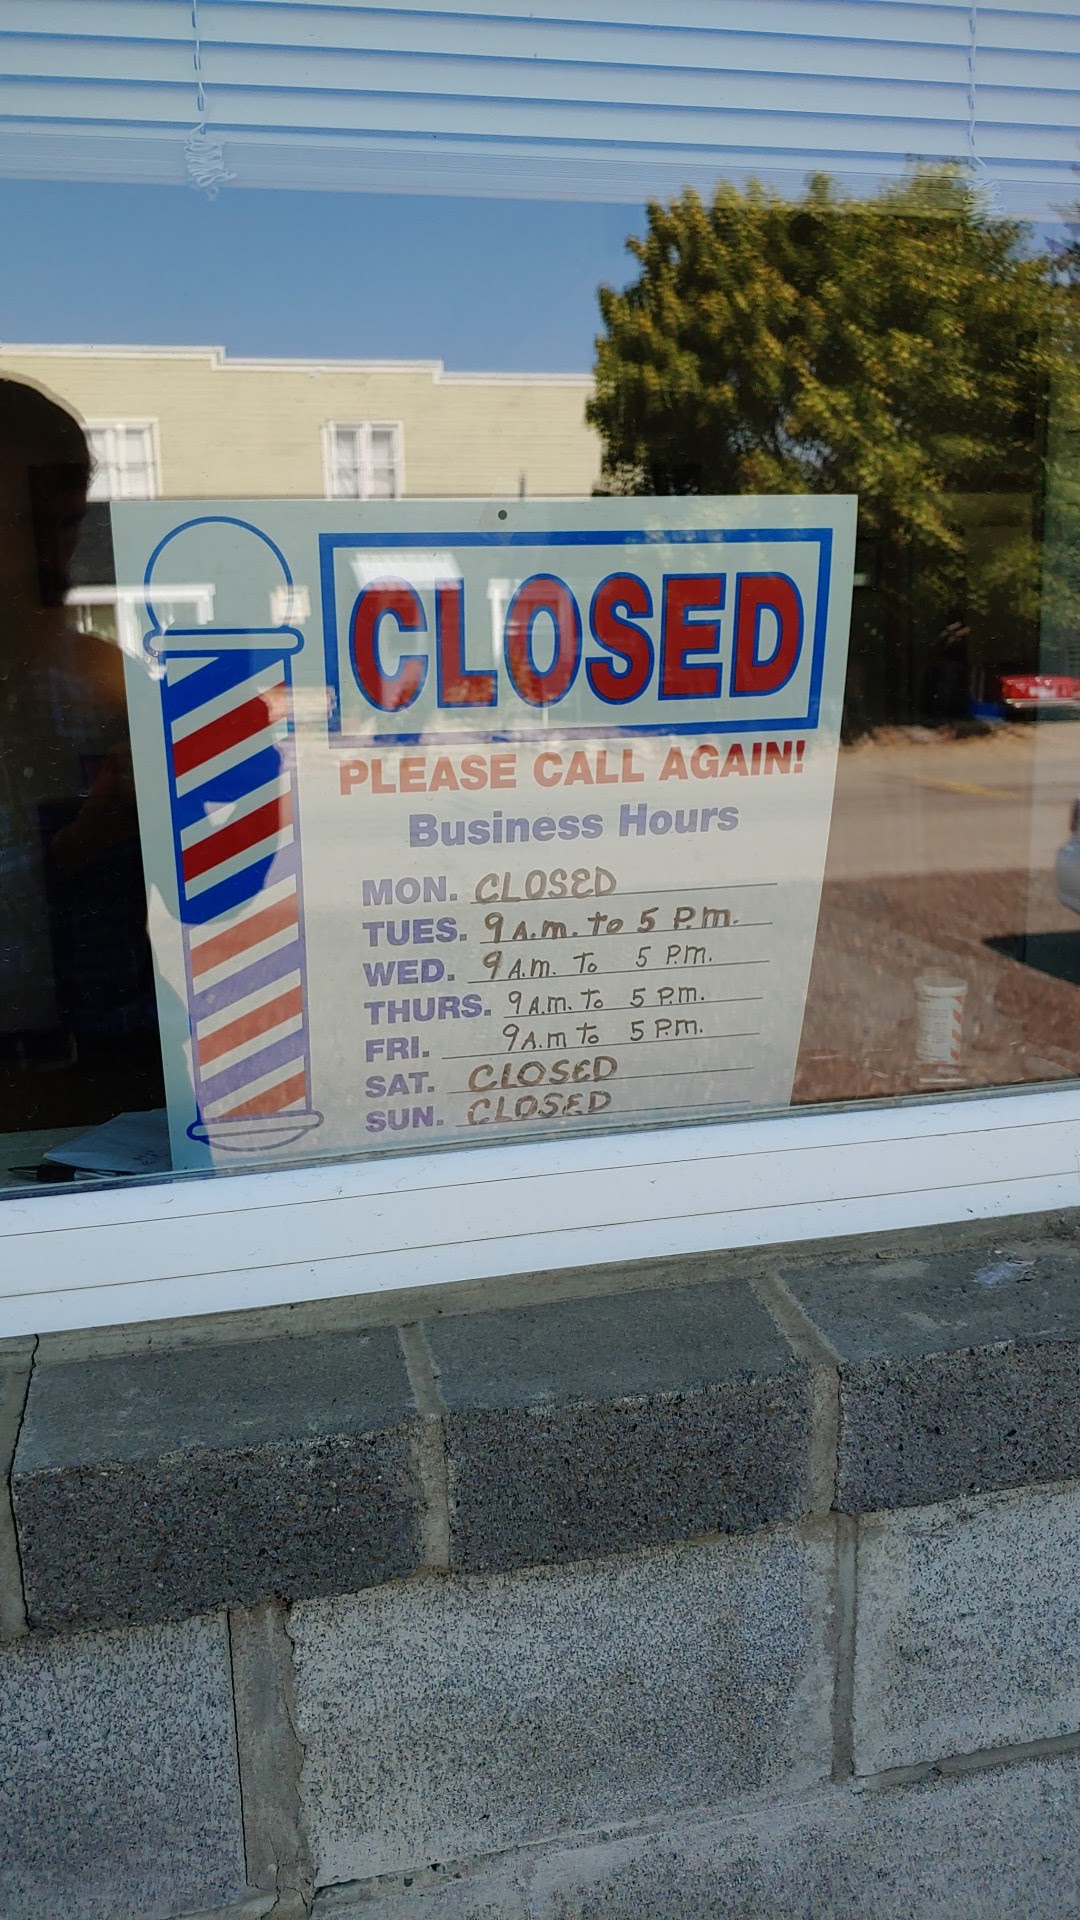 Charlie's Barber Shop Too 219 Main St, Kittitas Washington 98934